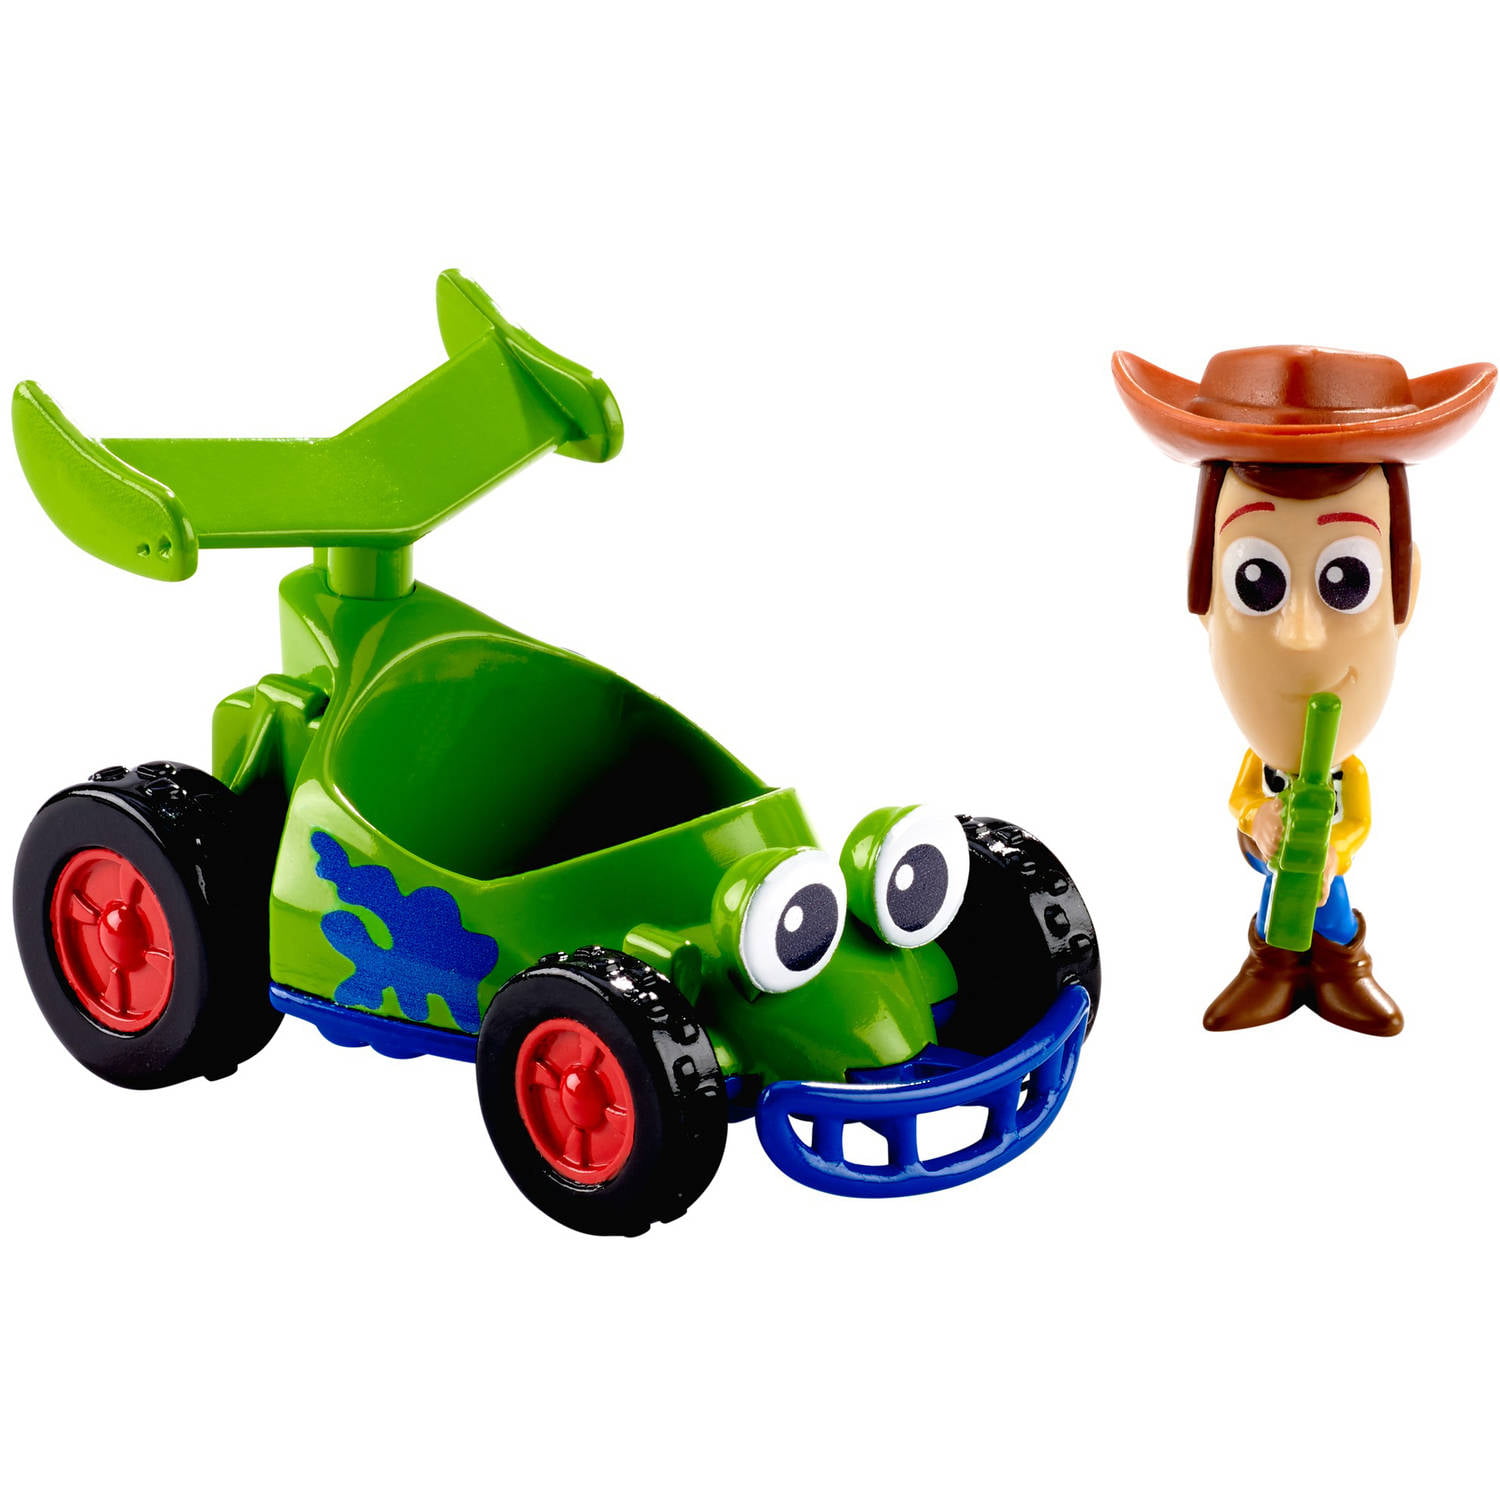 Disney Toy Story Mini Woody and RC - Walmart.com - Walmart.com